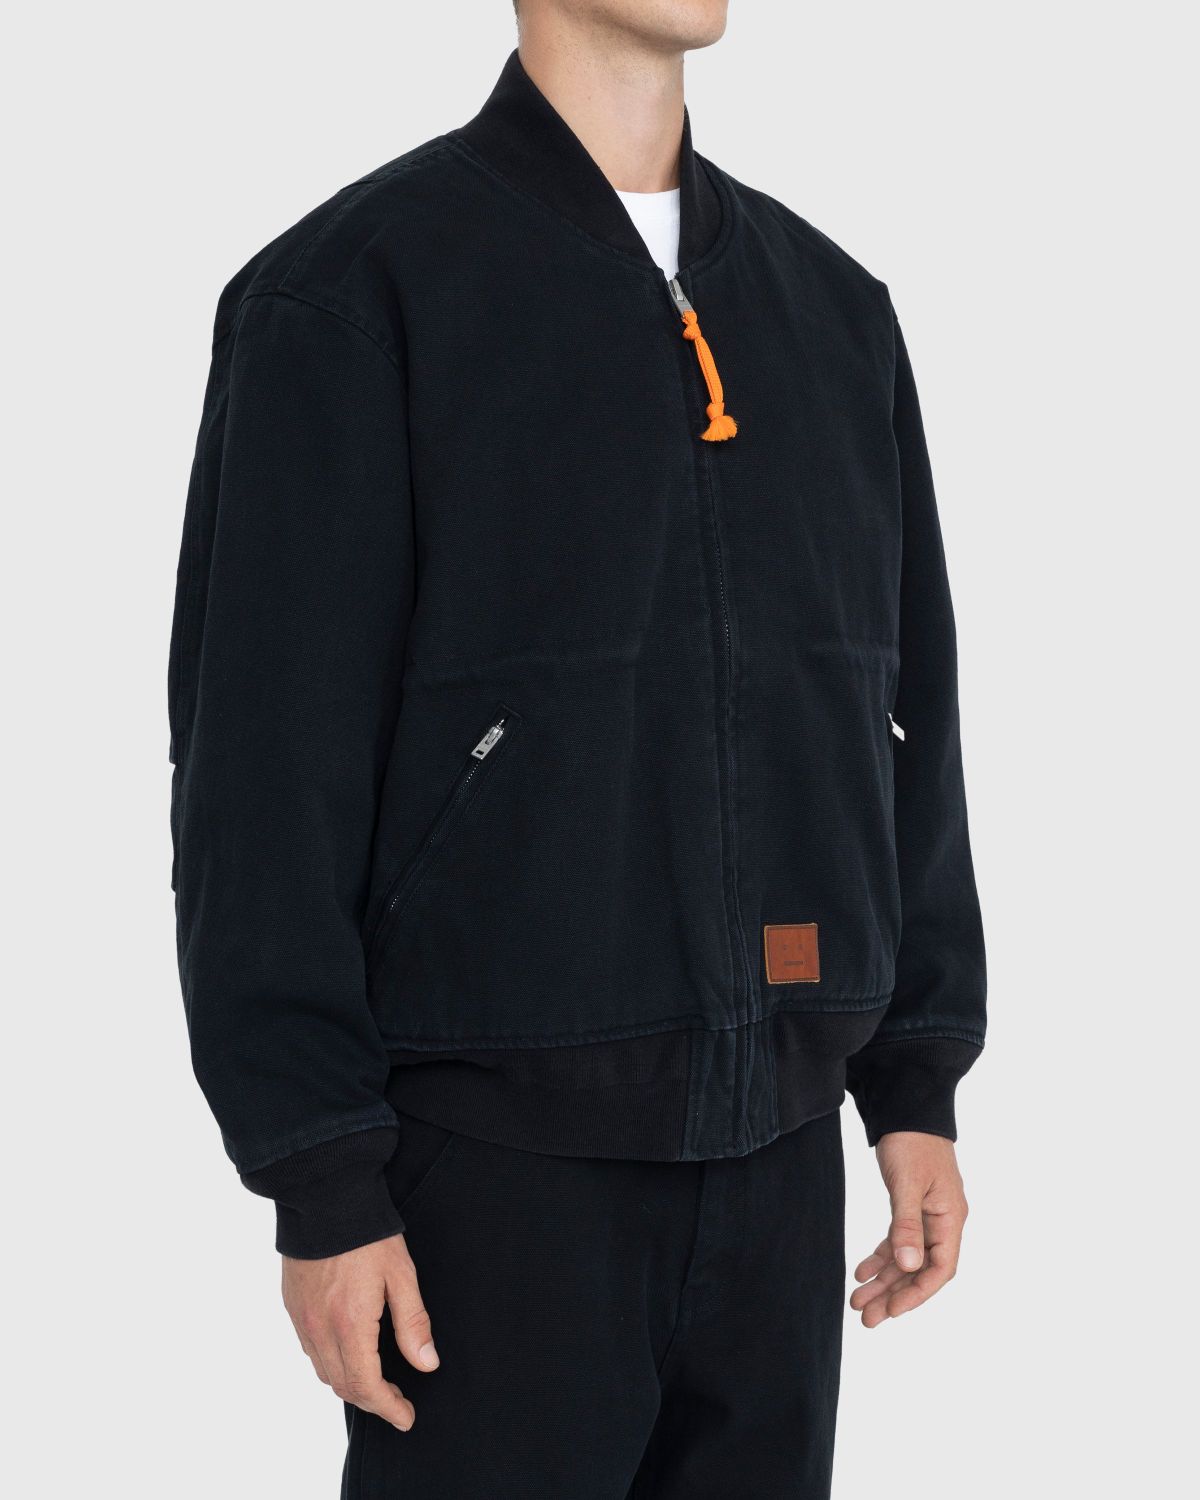 Acne Studios – Organic Cotton Bomber Jacket Black - Outerwear - Black - Image 3